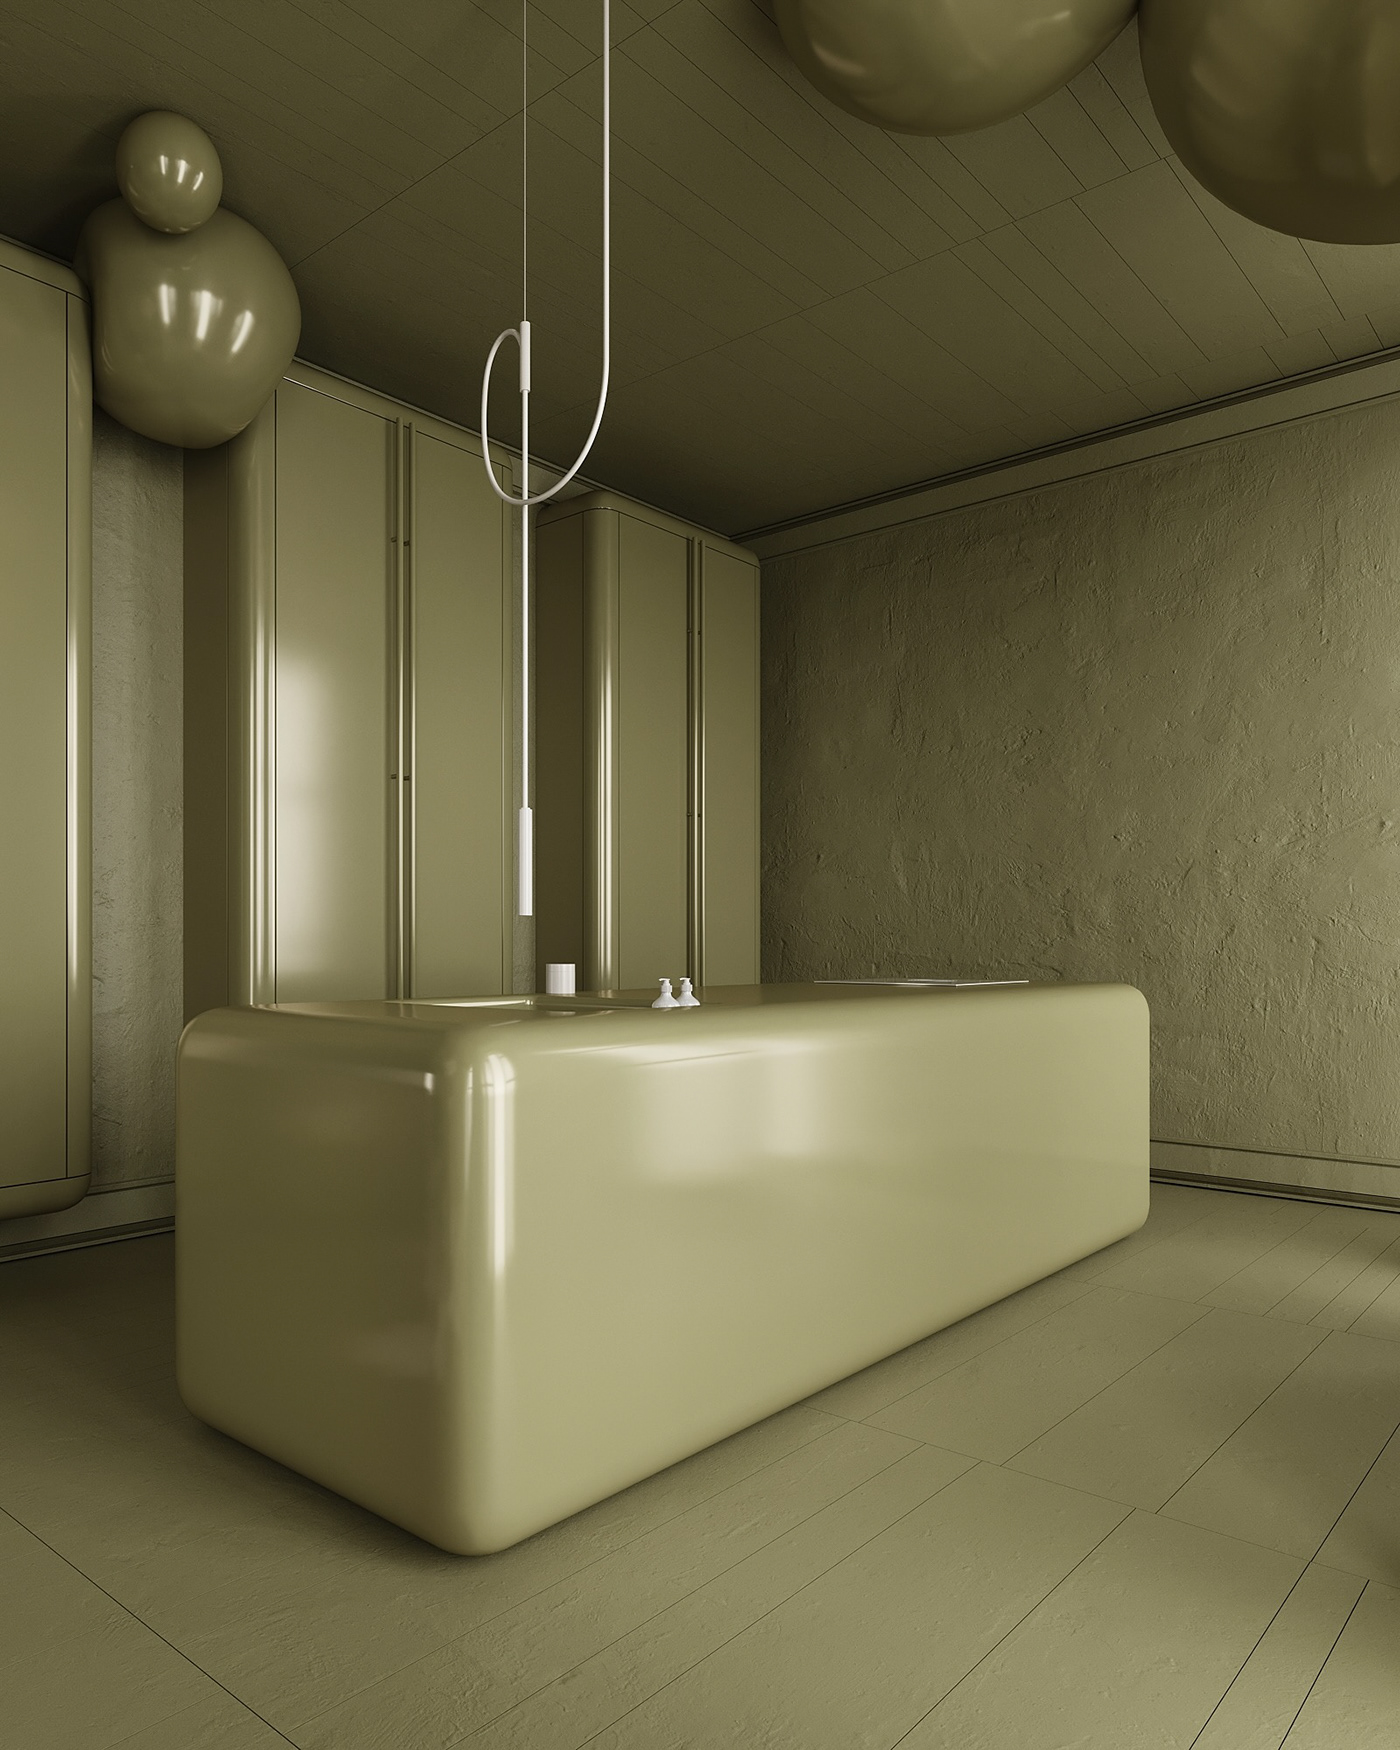 design visualisation 3dmax modern kitchen furniture minimalist apartment living room architecture archviz corona Render bathroom bedroom nterior